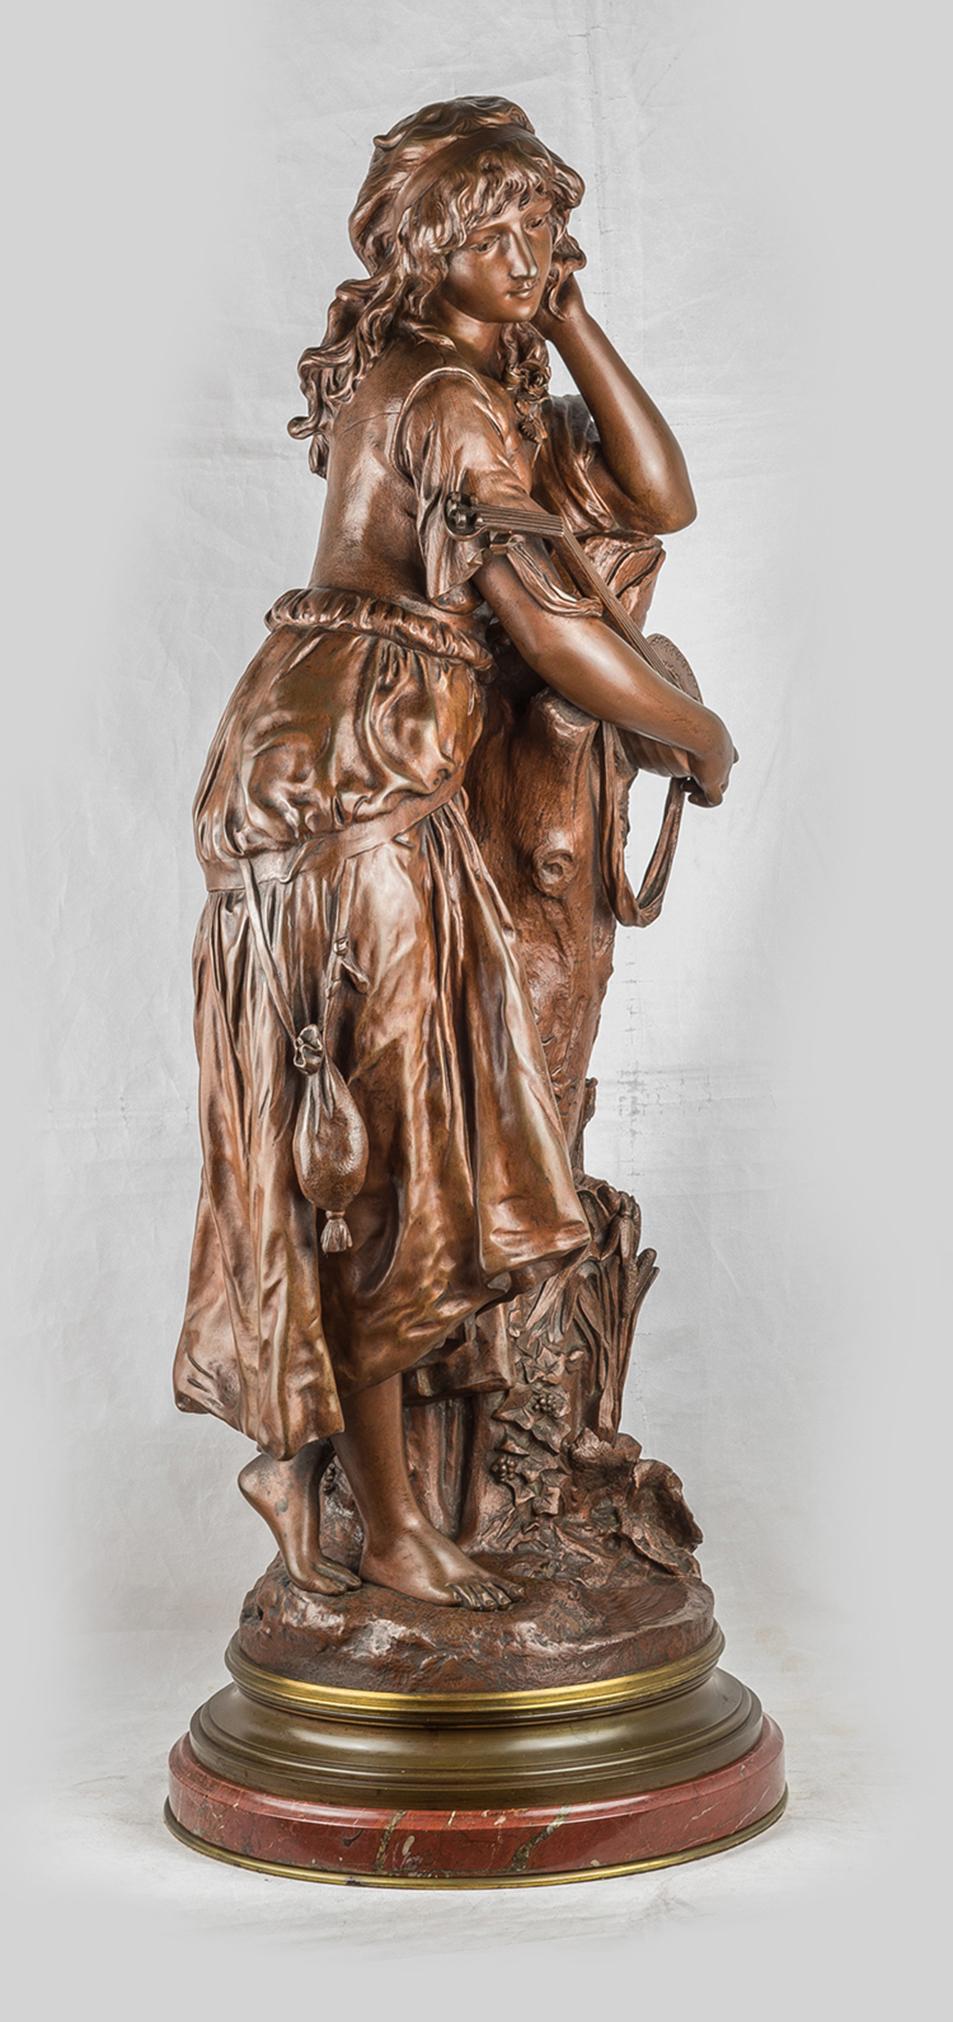 Maiden with a Lute, Patinated Bronze Sculpture by Adrien Etienne Gaudez - Gold Still-Life Sculpture by Adrien Étienne Gaudez